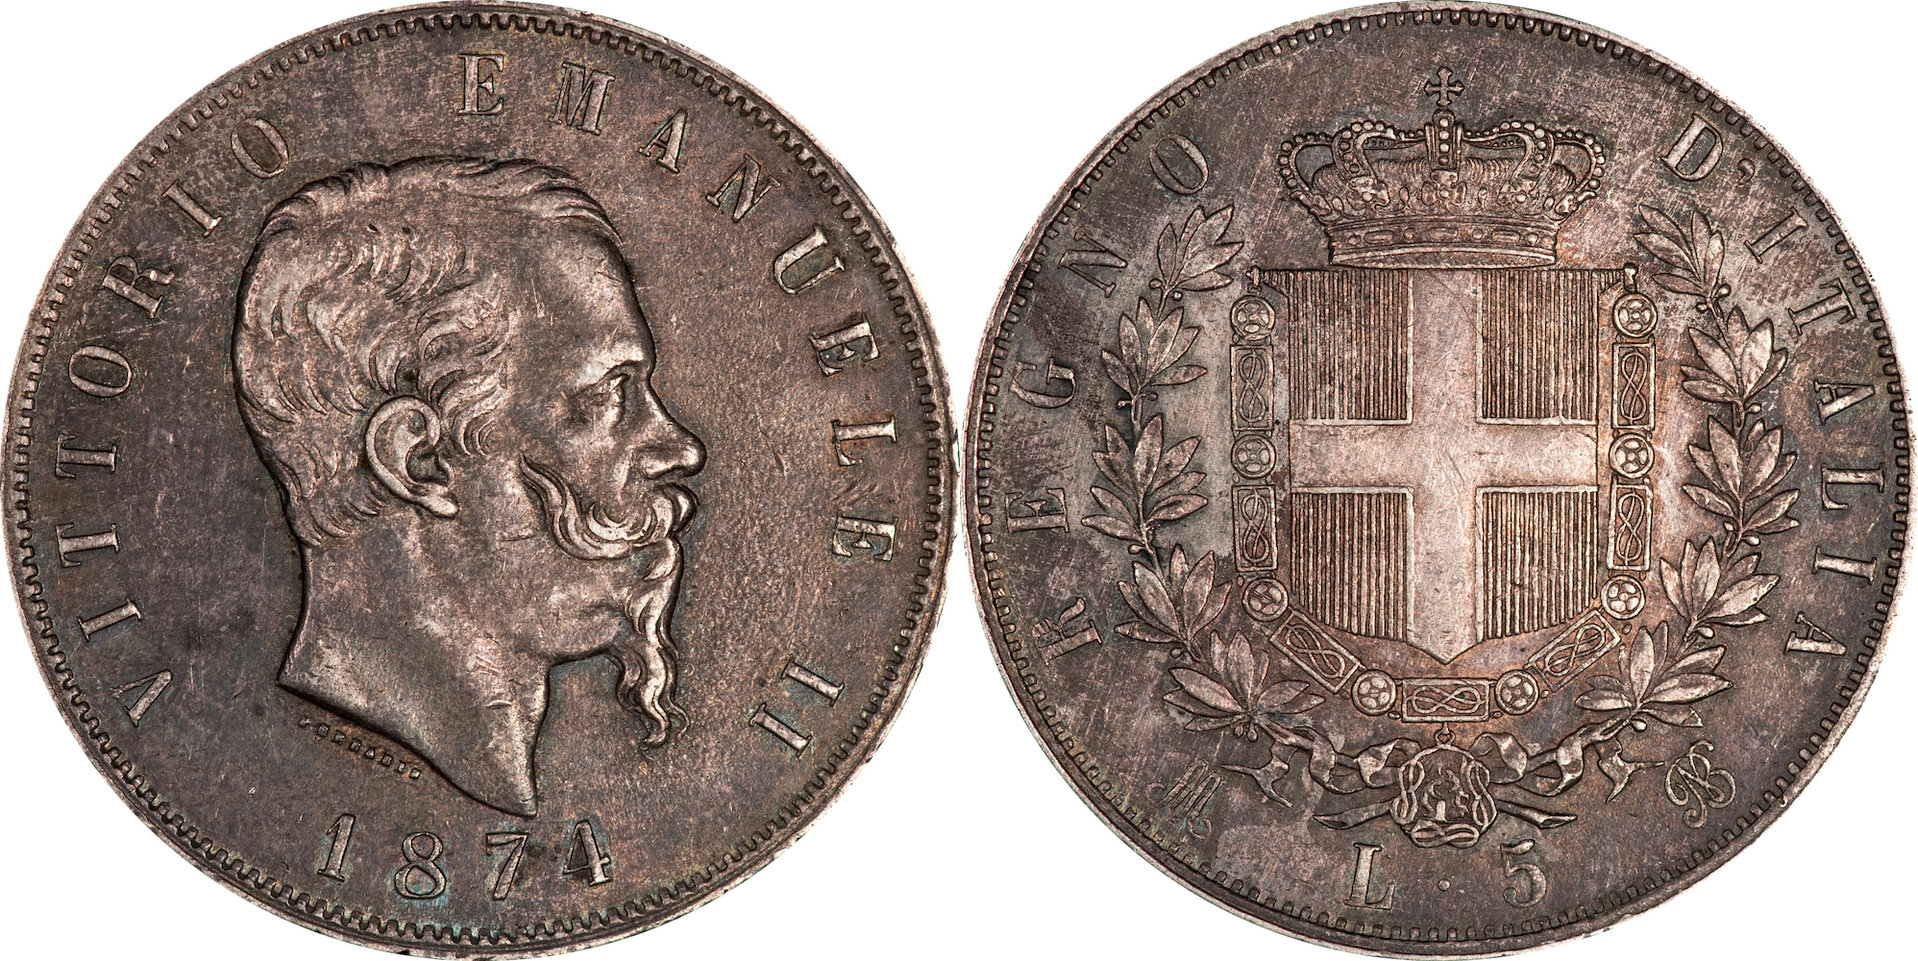 Italy - 1874 M BN 5 Lire.jpg